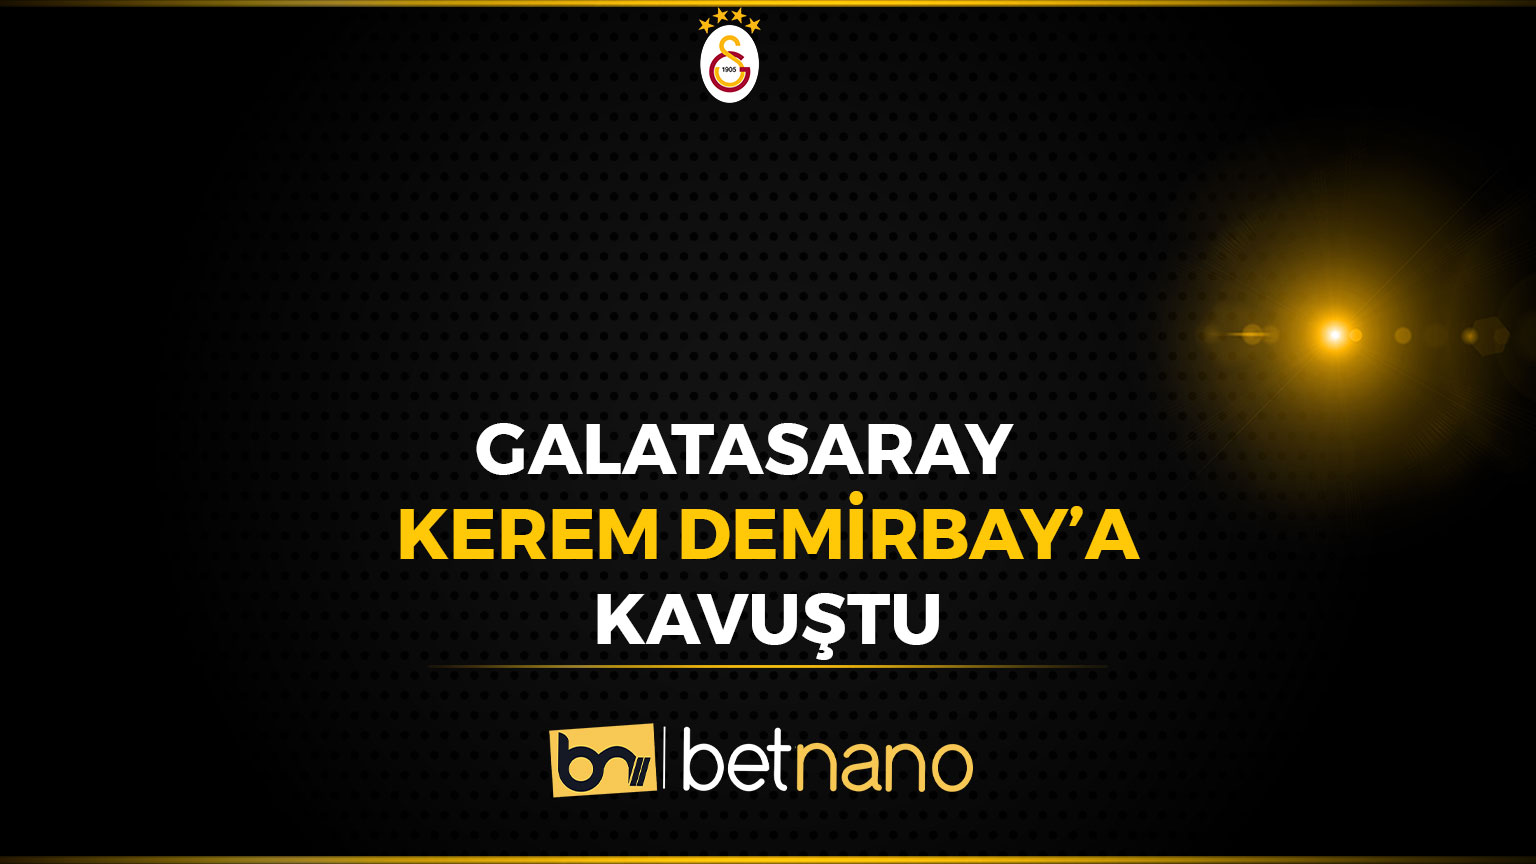 Galatasaray Kerem Demirbay'a Kavuştu!